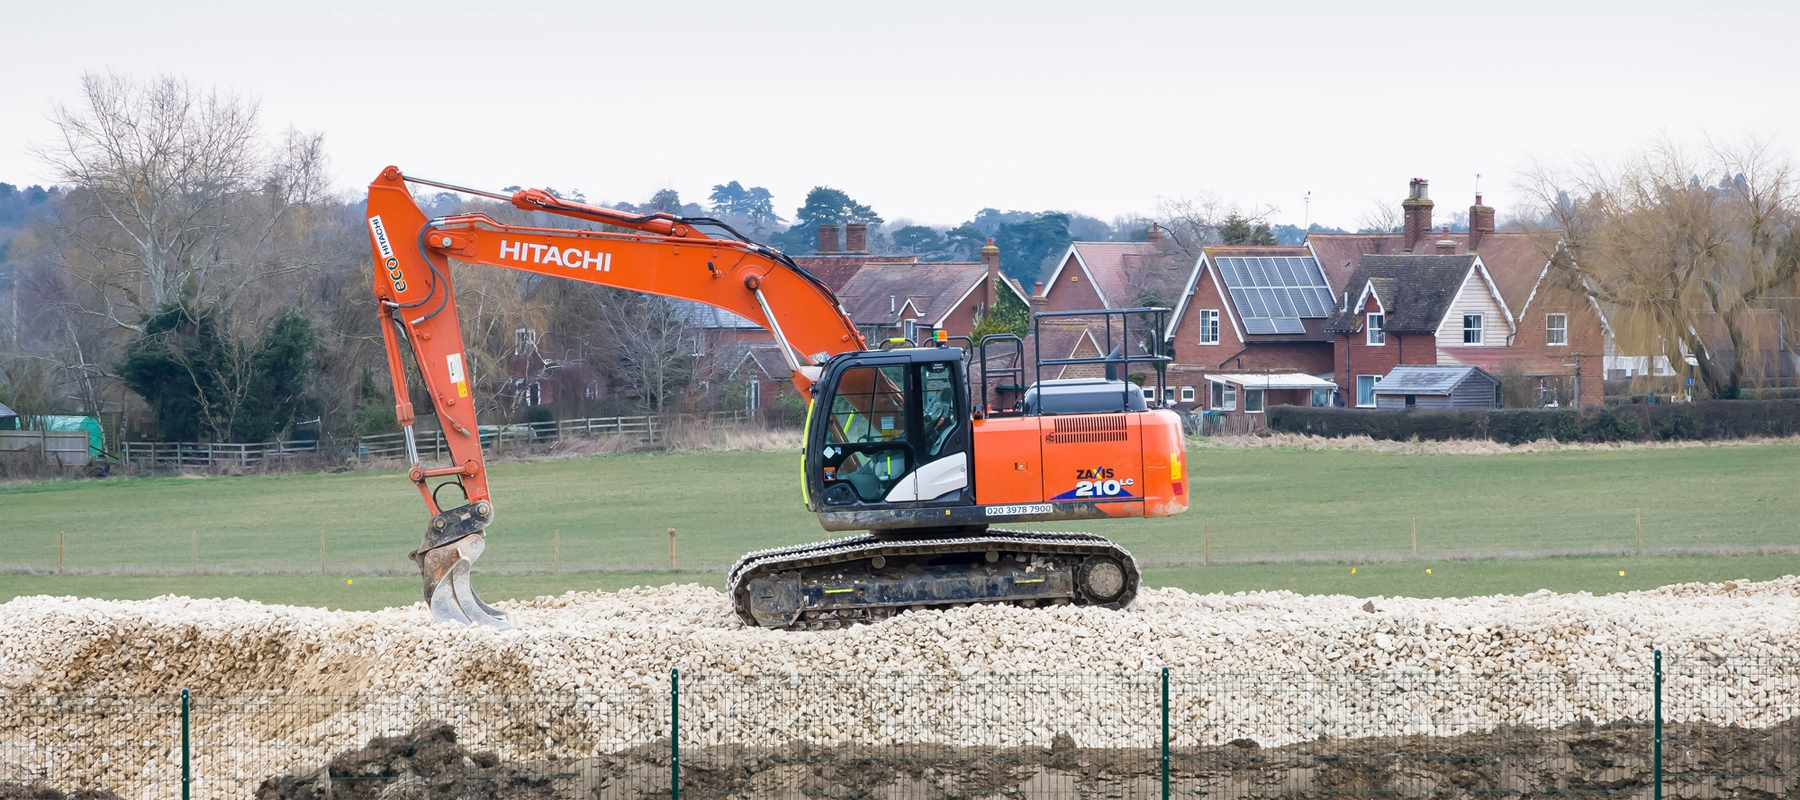 Large Orange Hitachi Excavator Digging